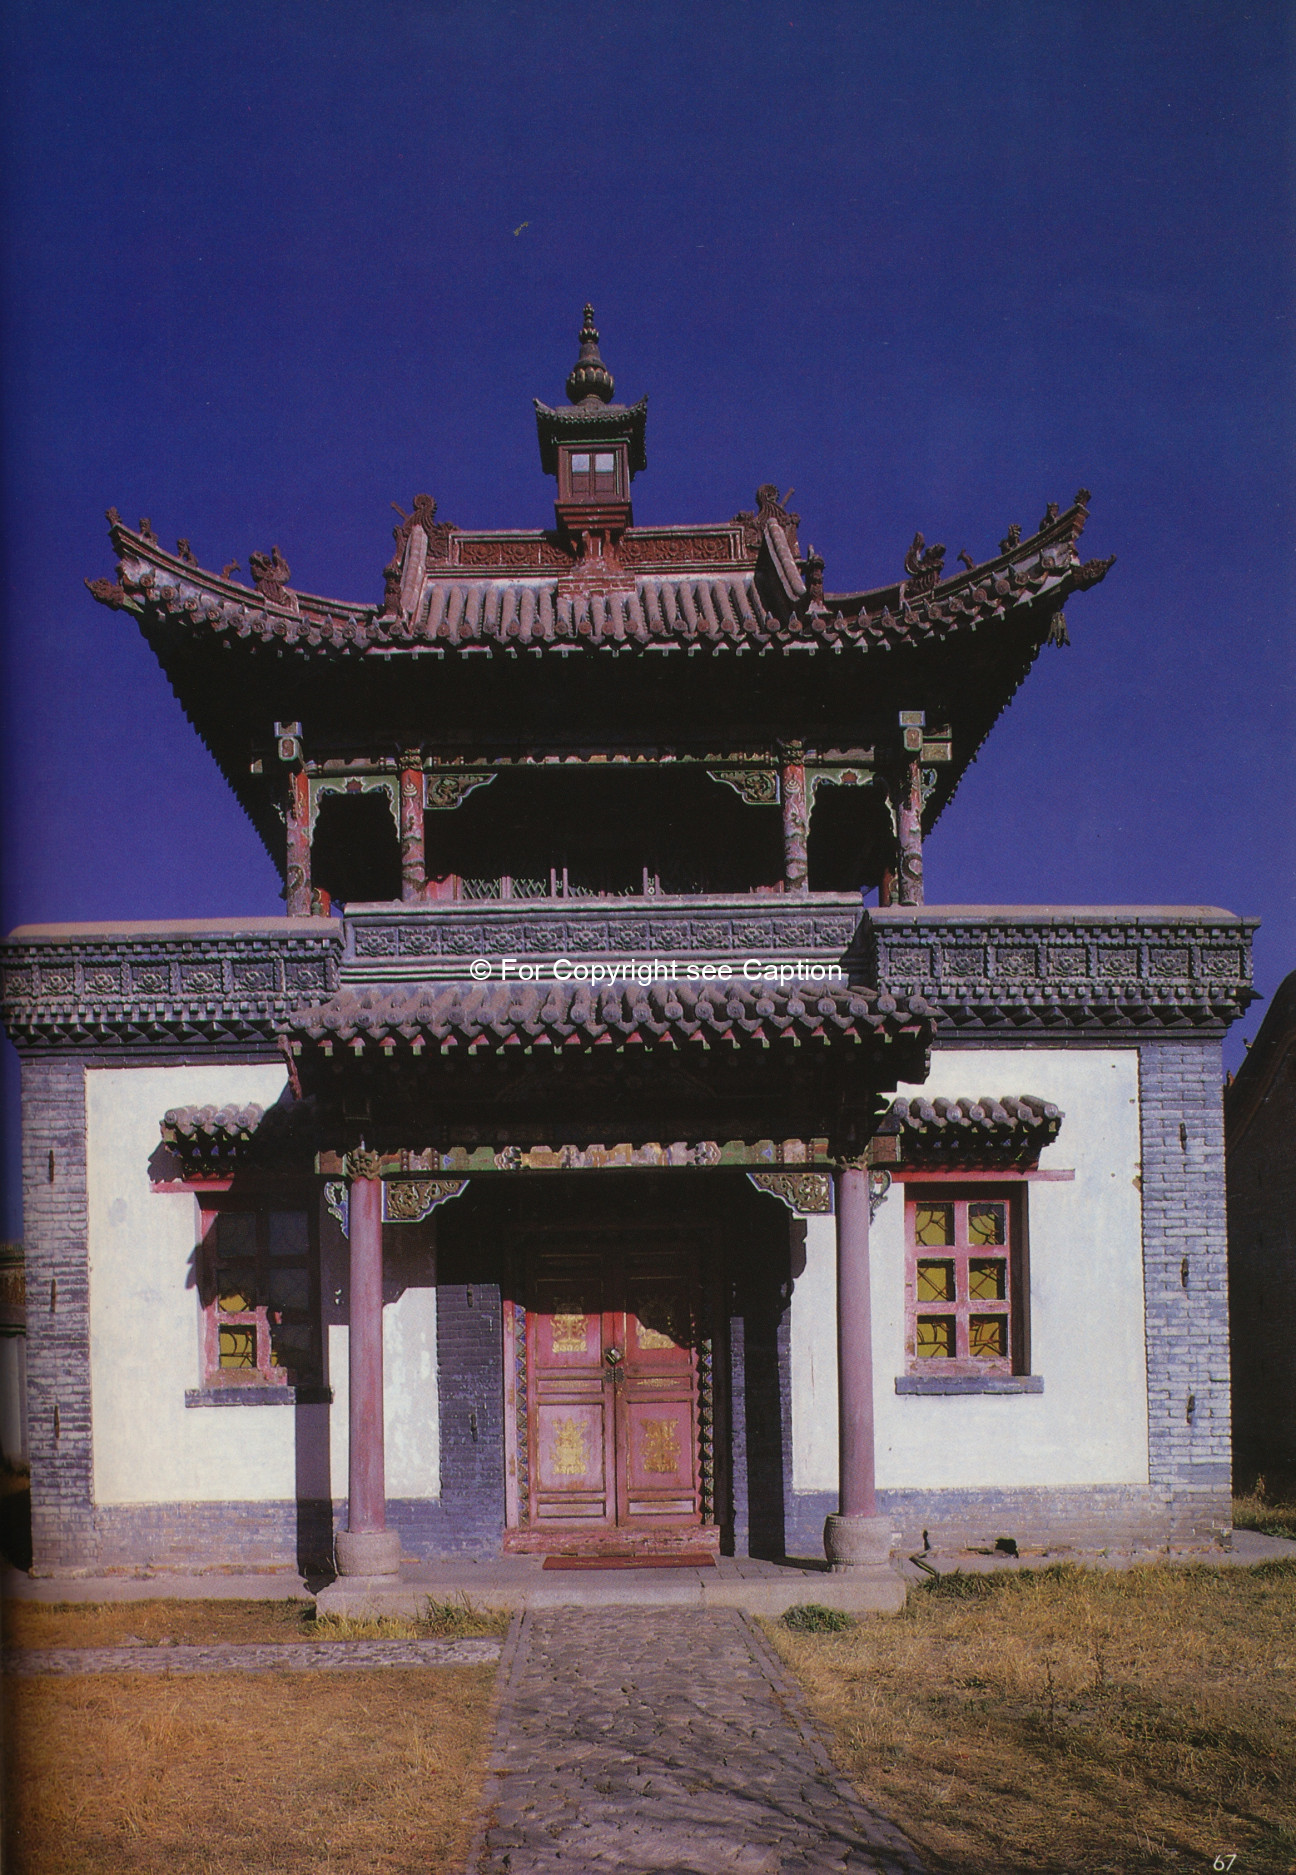 Zuugiin süm. Tsültem, N., Mongolian Architecture. Ulaanbaatar 1988, 67